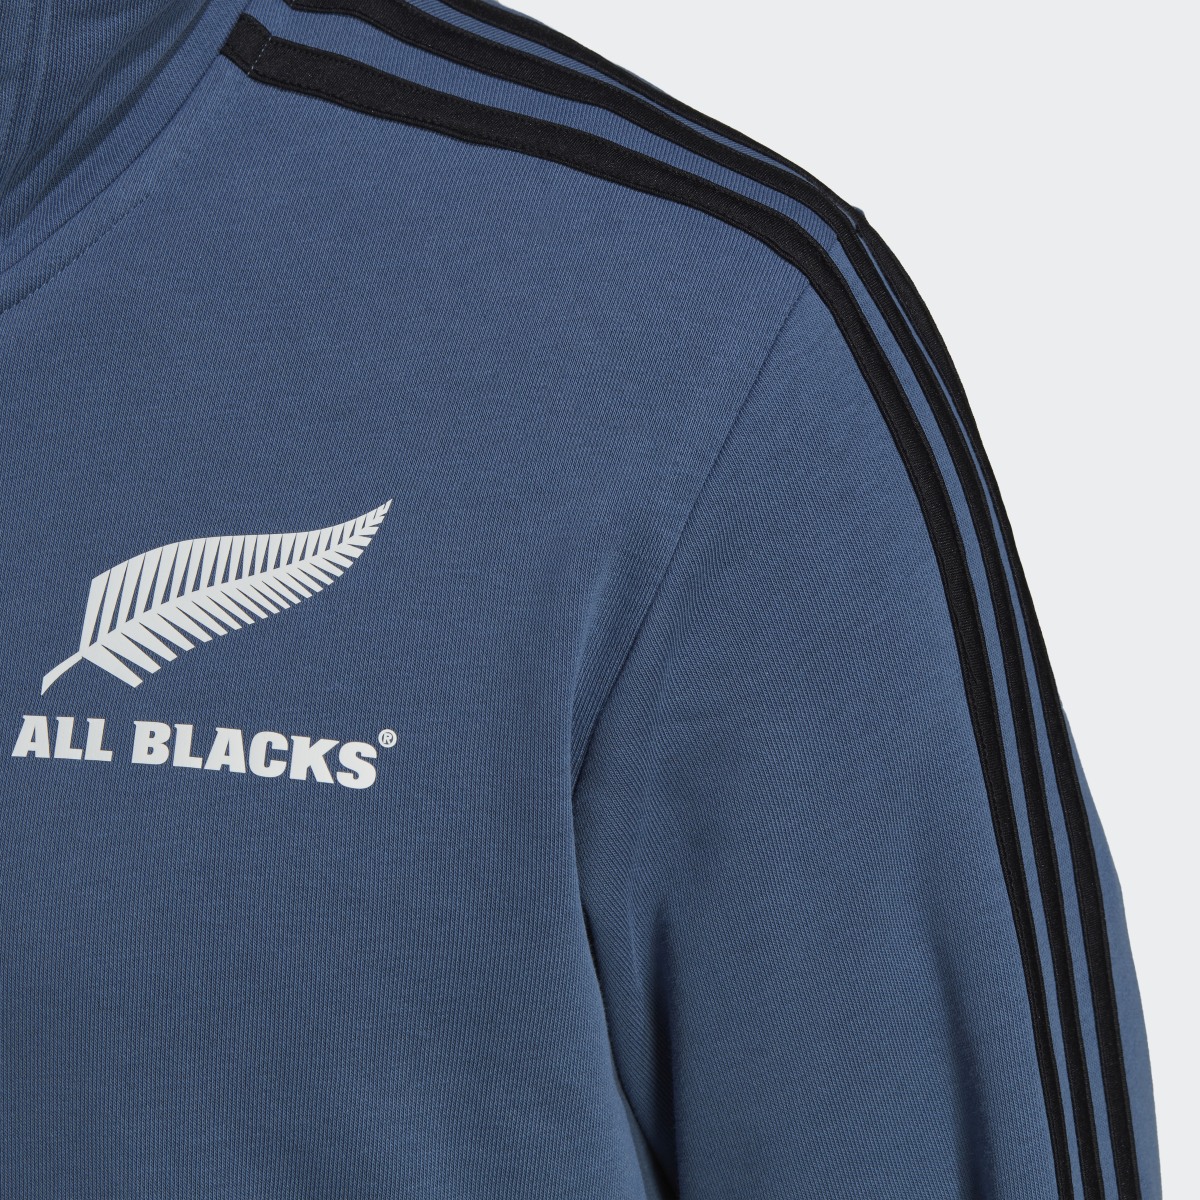 Adidas Chaqueta con capucha All Blacks Rugby 3 bandas. 8